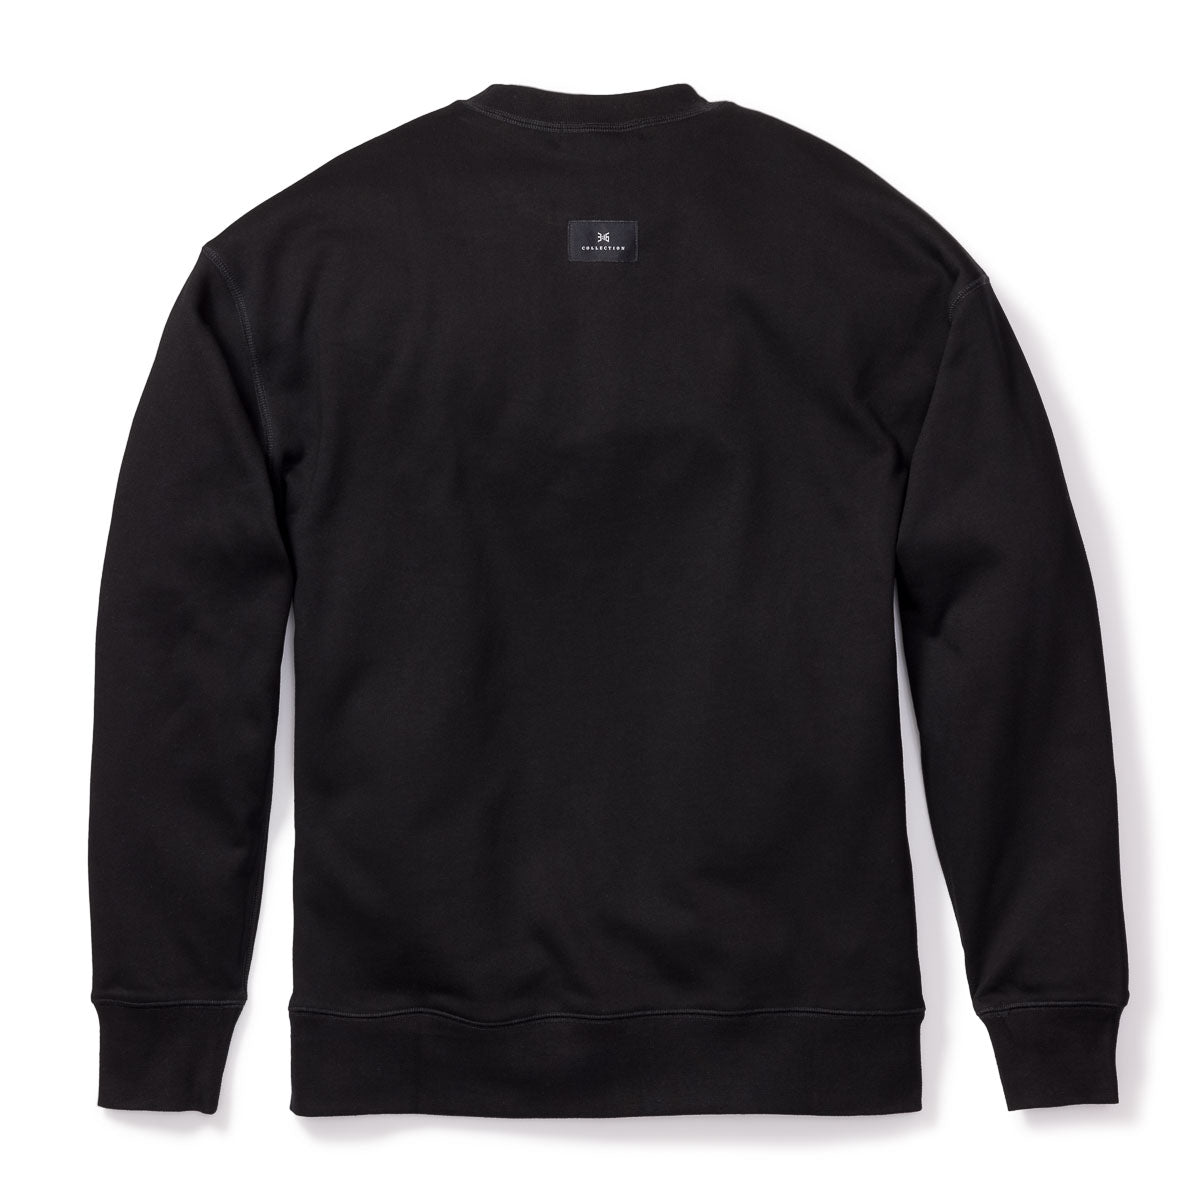 3:16 Signature Sweatshirt - Black - 316collection